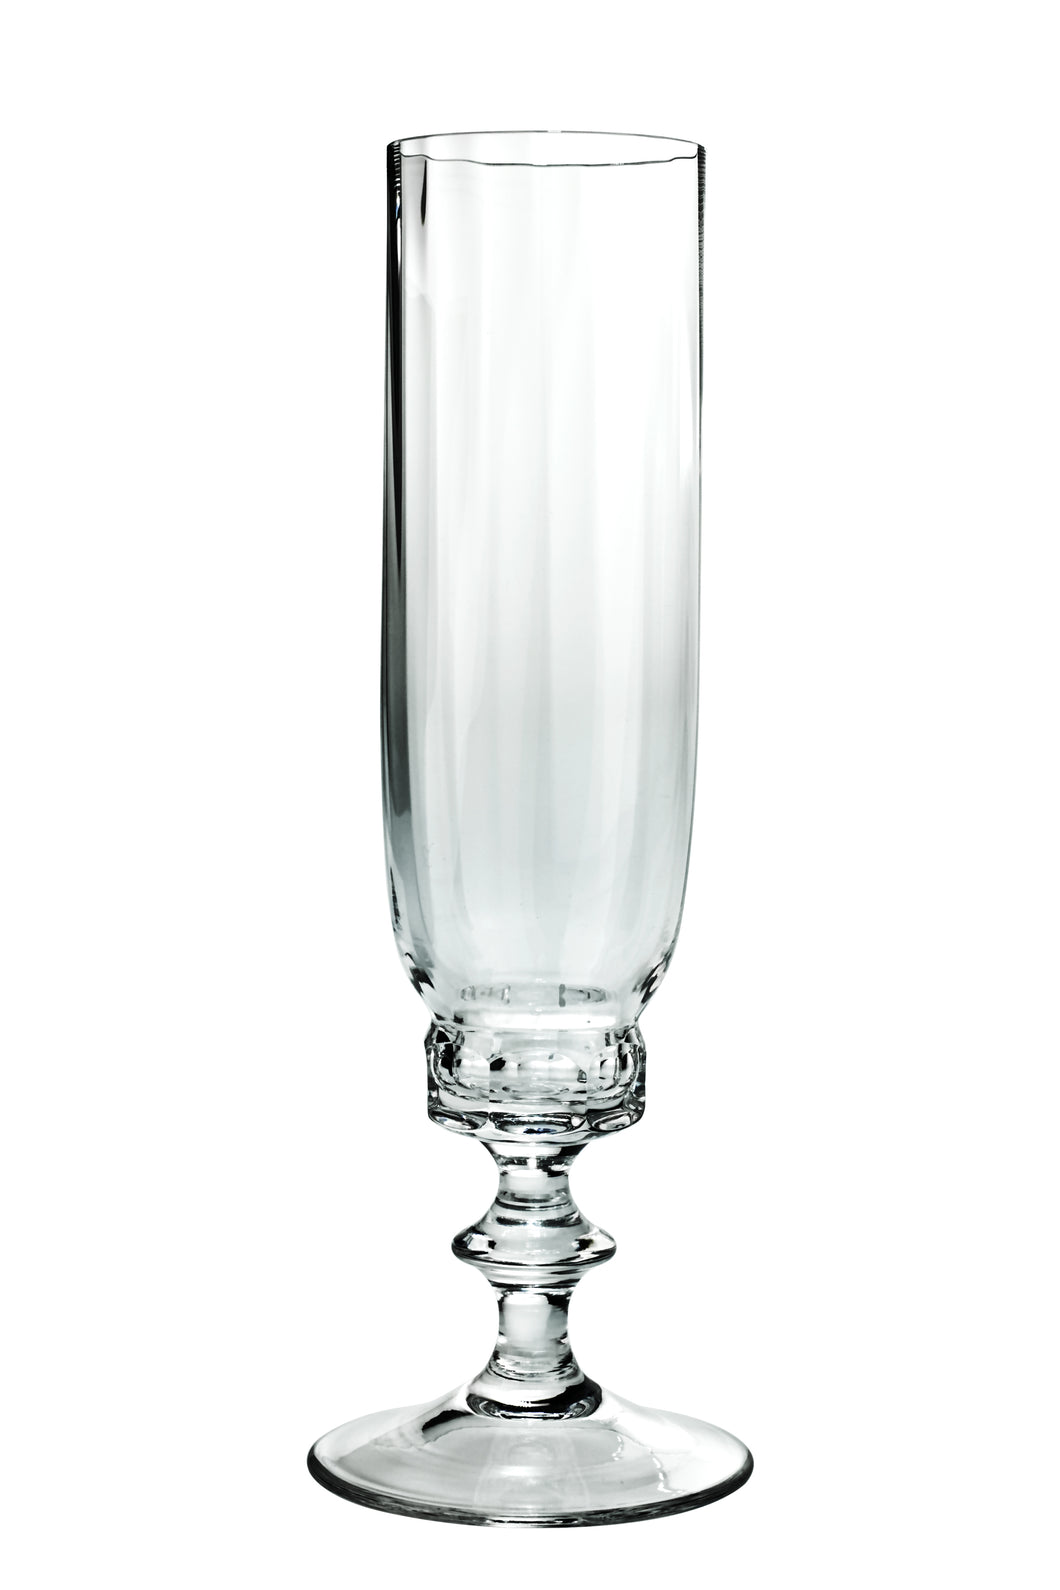 PAN Sektglas 229 mm - klares Glas, optisch, Flächenschliff